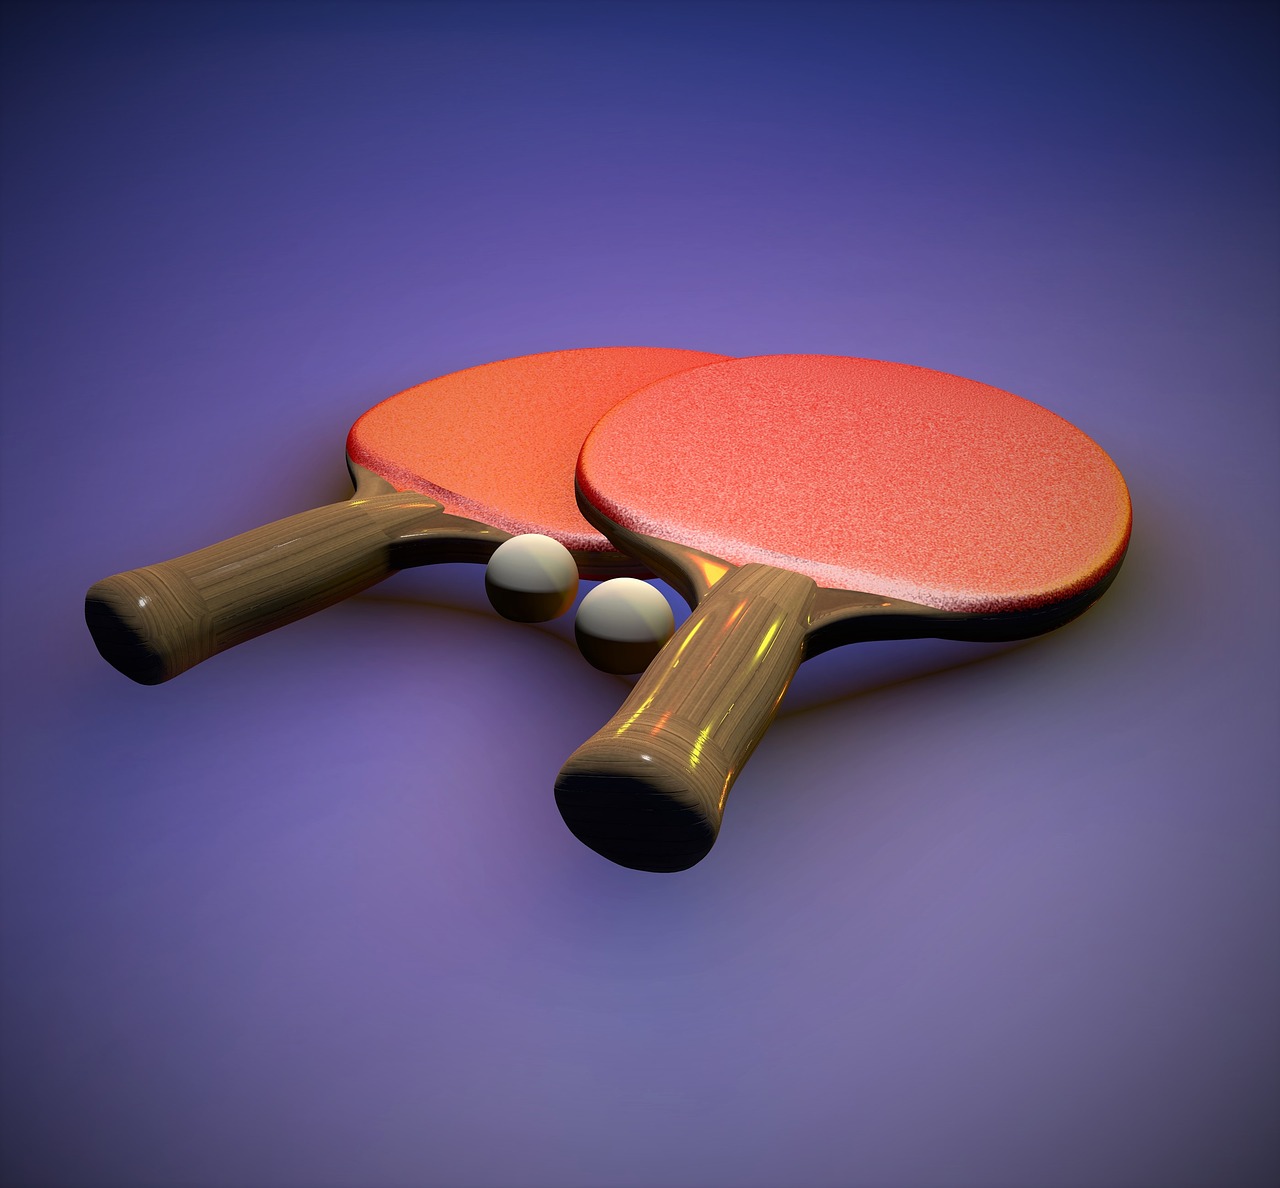 table tennis ping-pong bat free photo